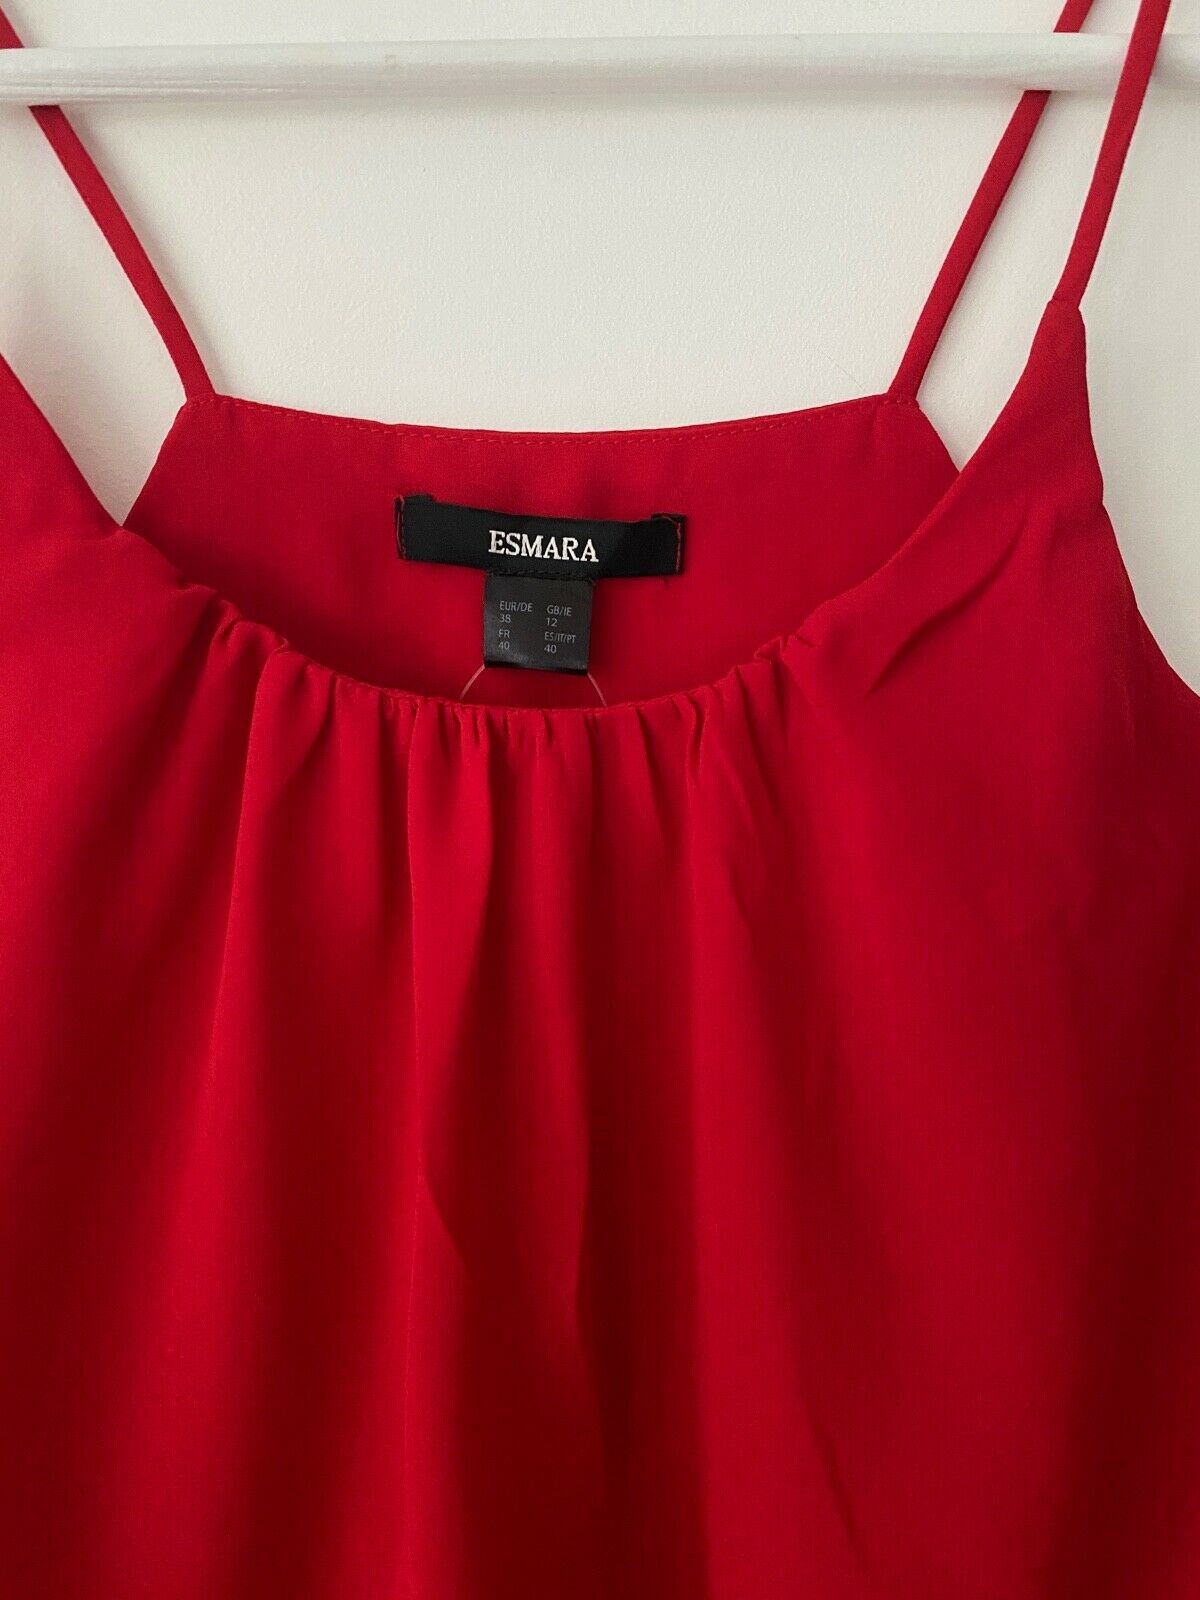 Esmara Red Layered Vest top Size 12